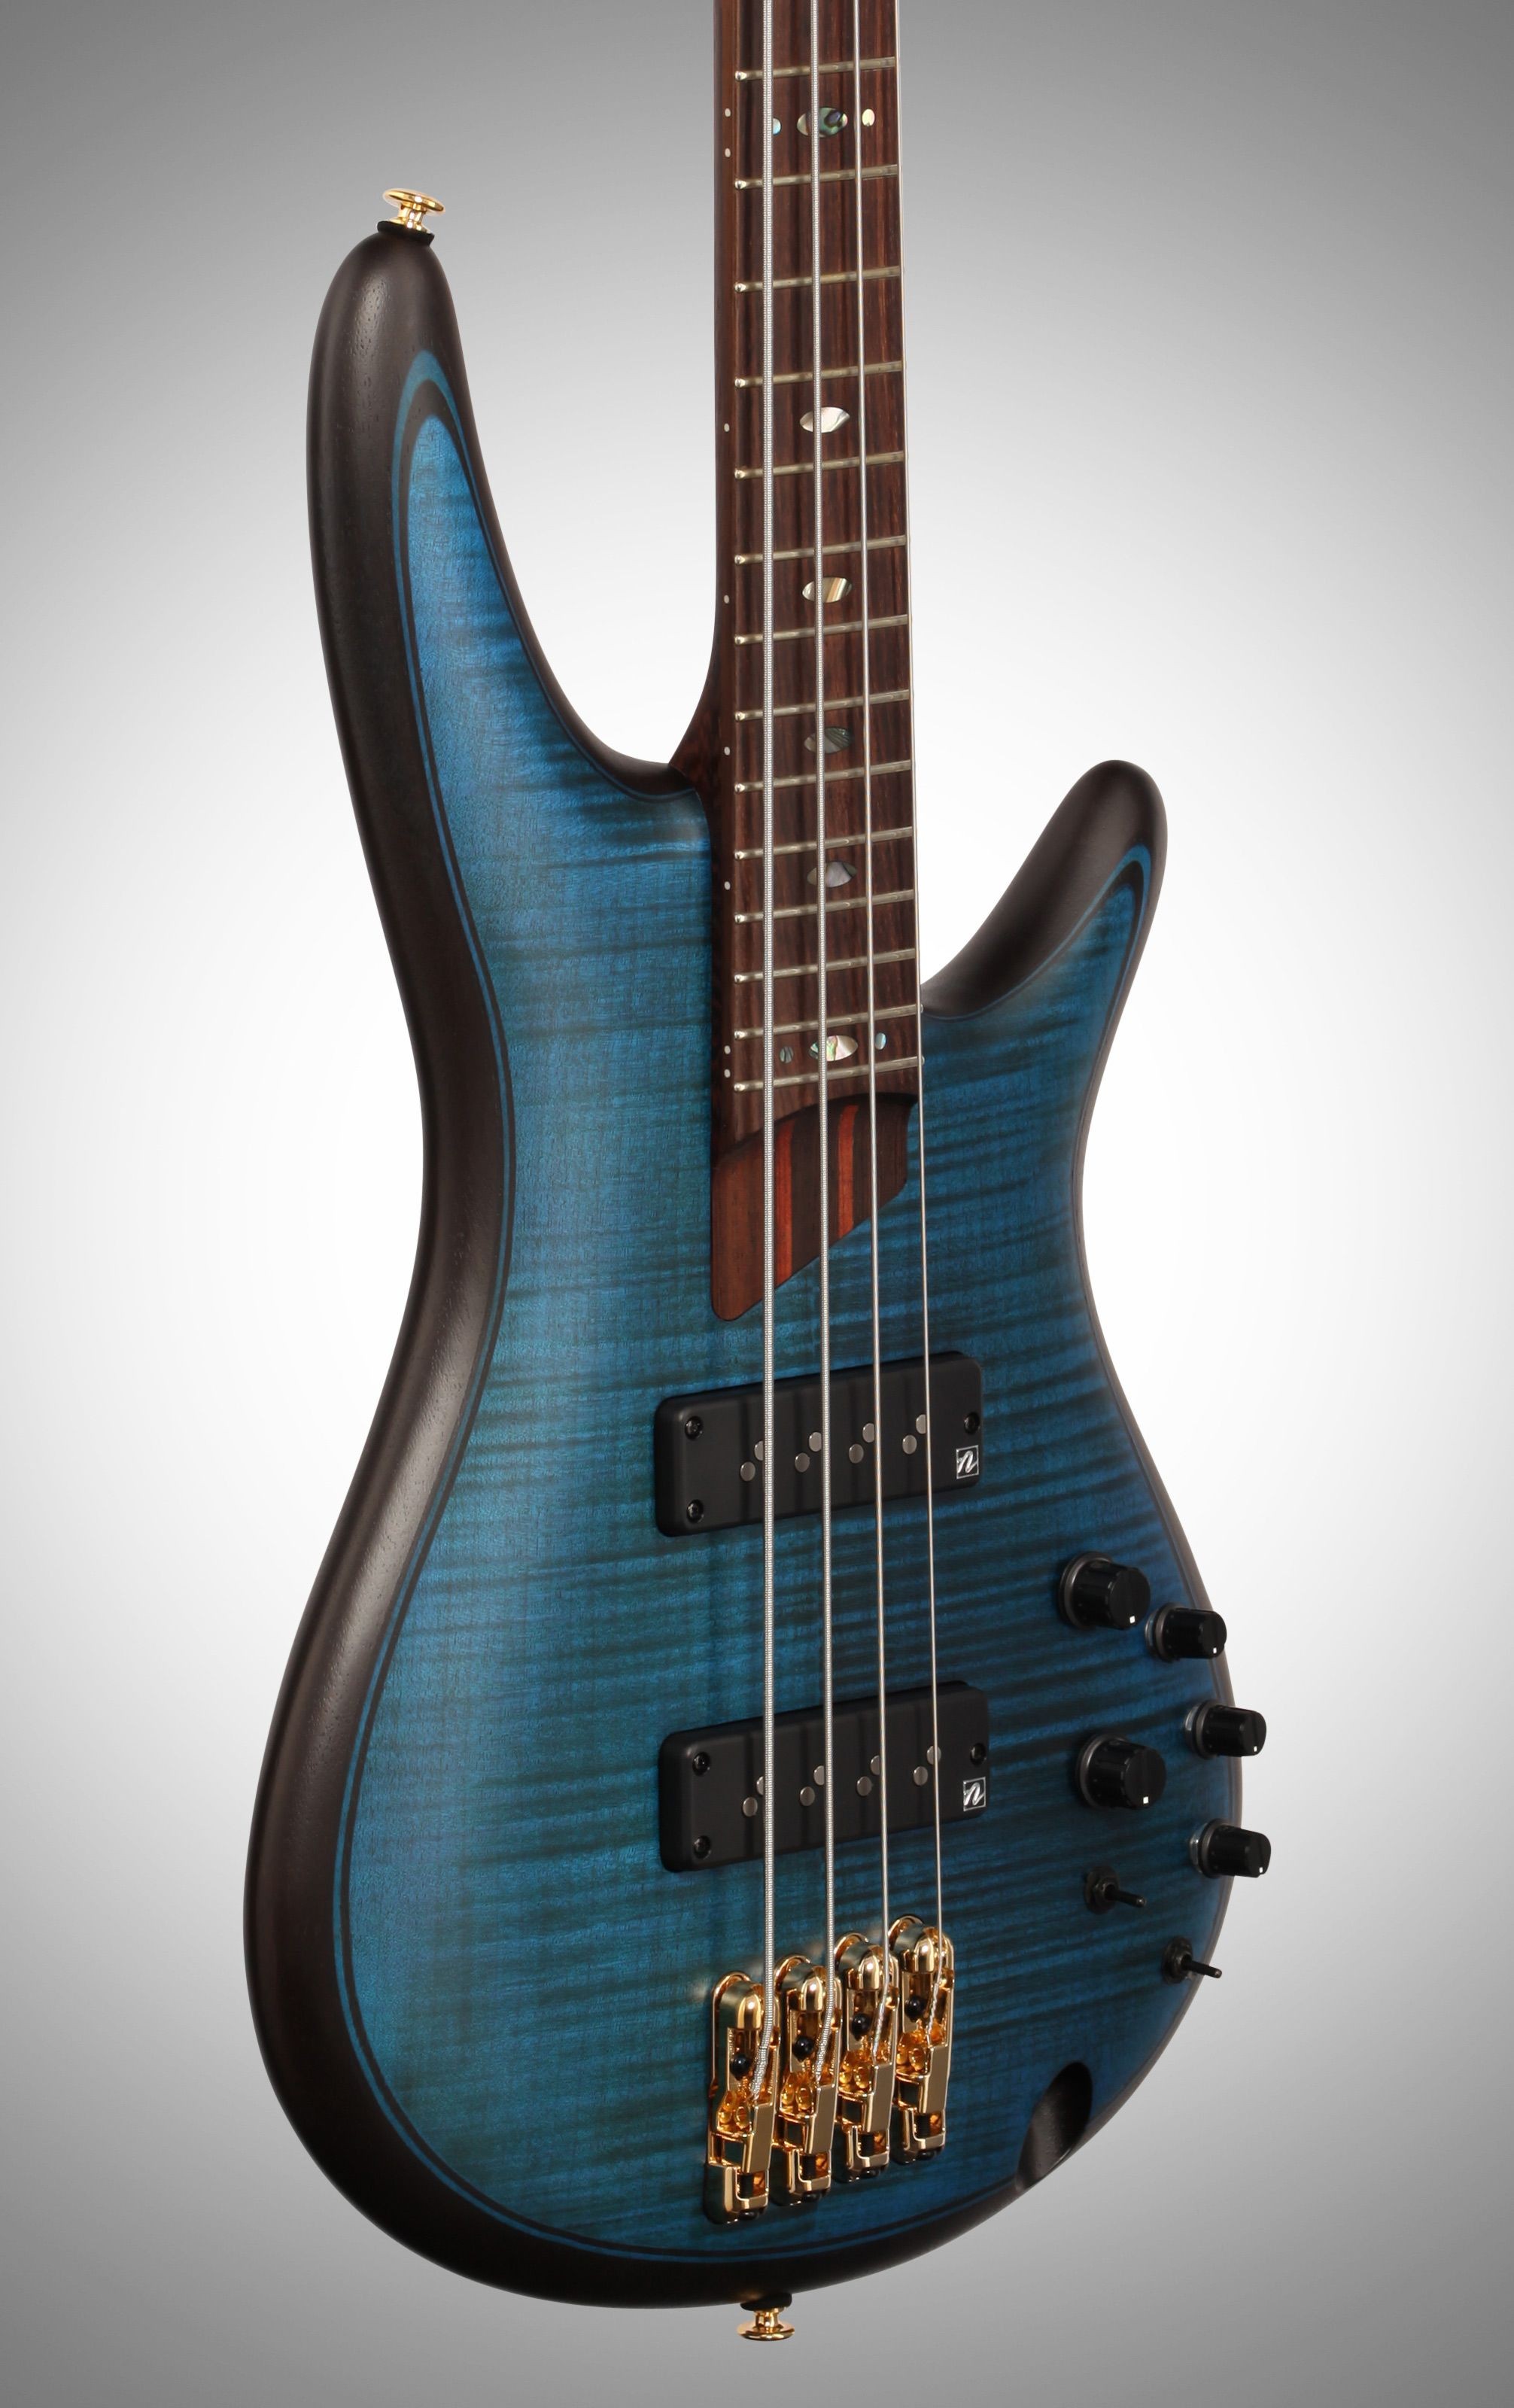 Rogue LX200BF Fretless Series III Electric Bass Guitar Metallic Blue mon Shopping Pinterest